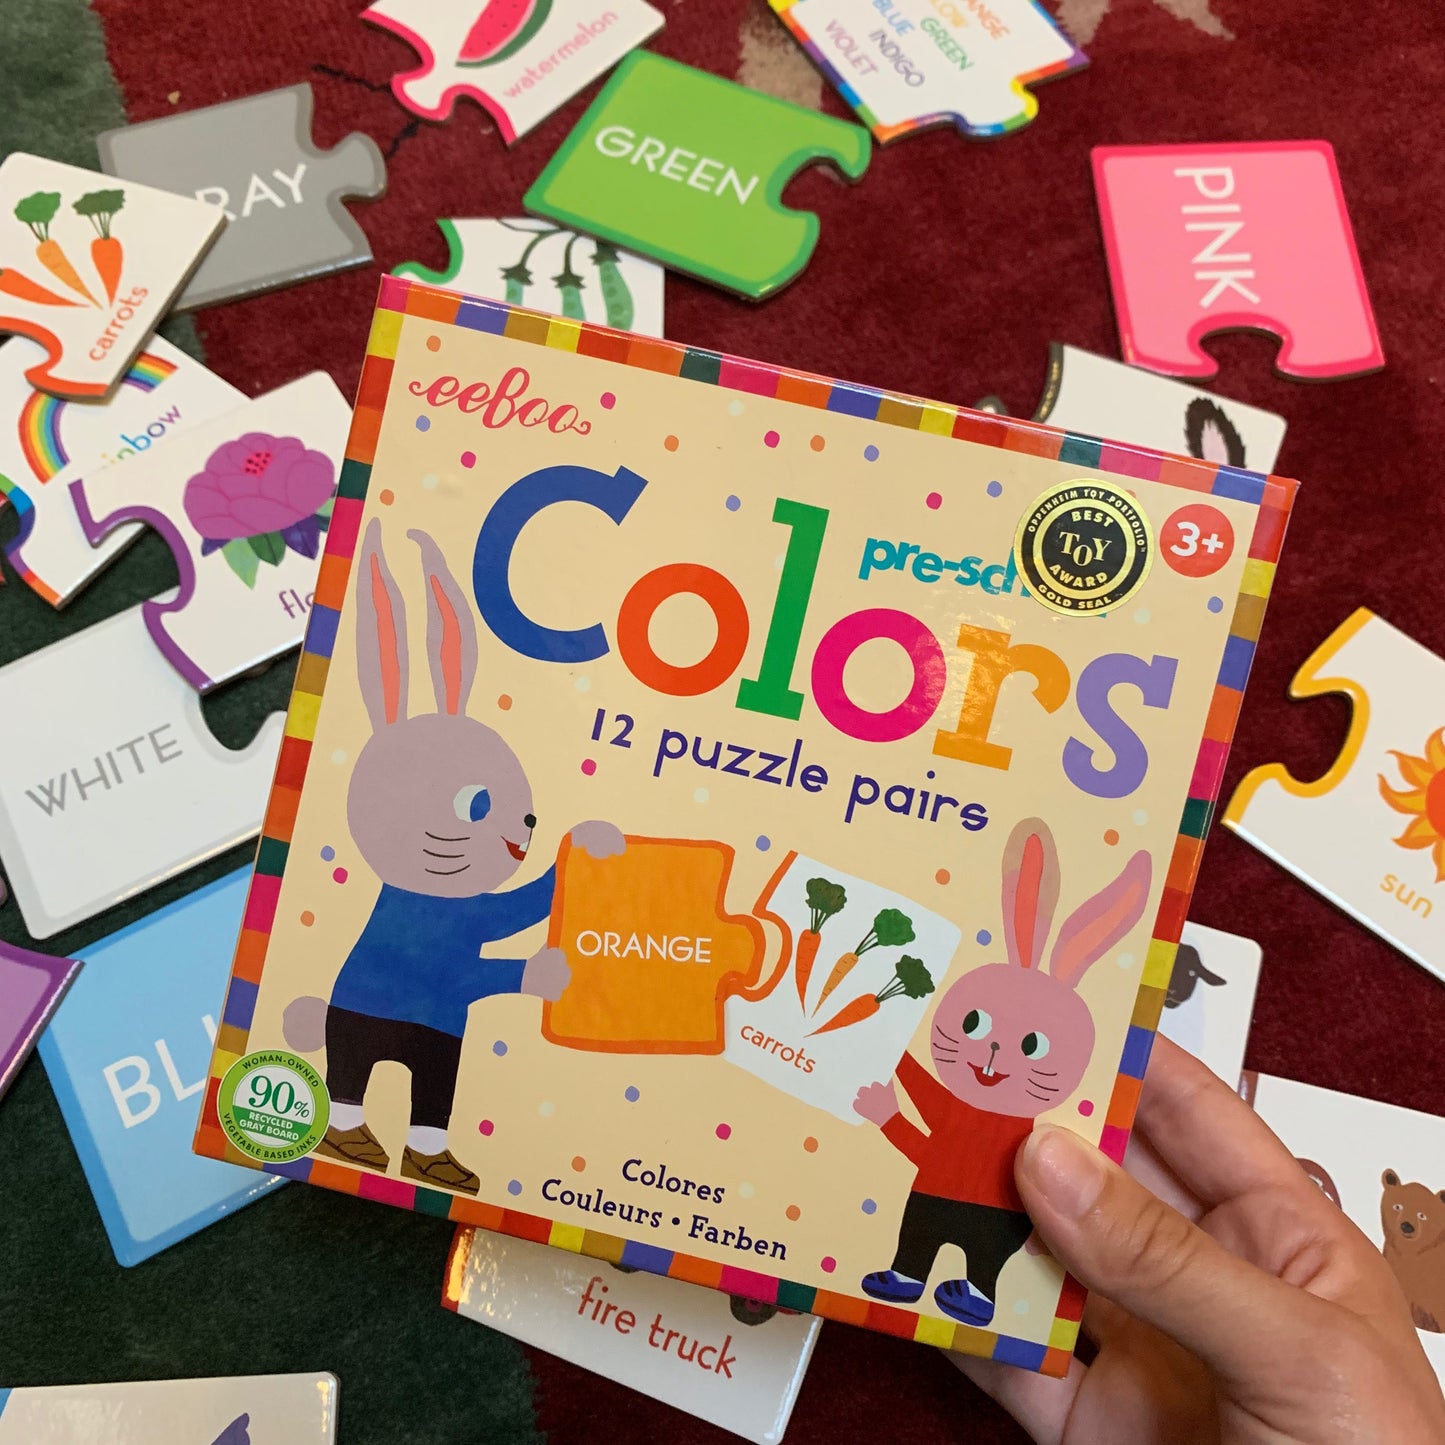 Pre-school Colors Puzzle Pairs